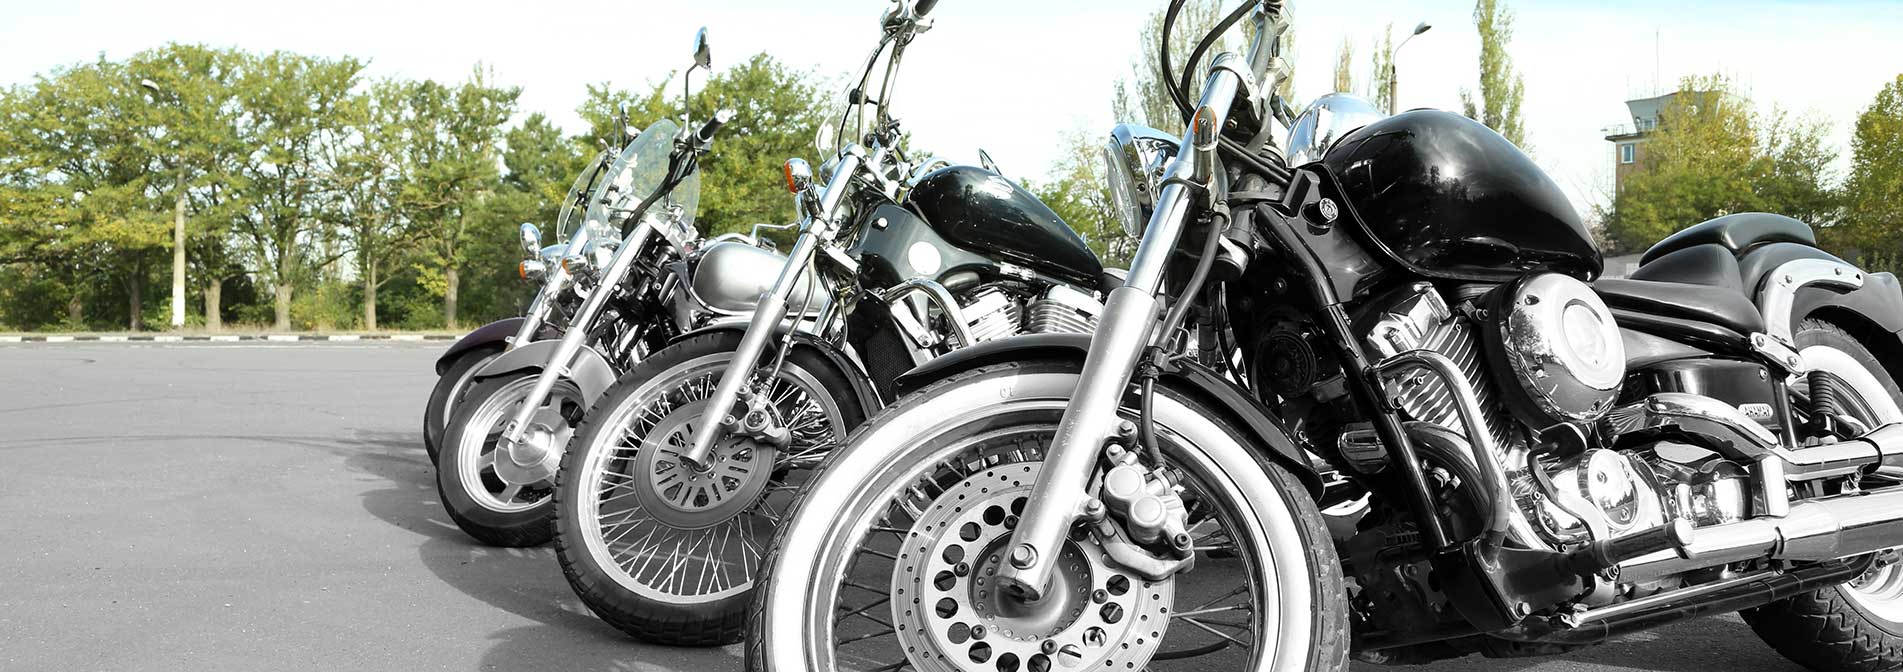 Custom Motorcycle Insurance - BikeBound